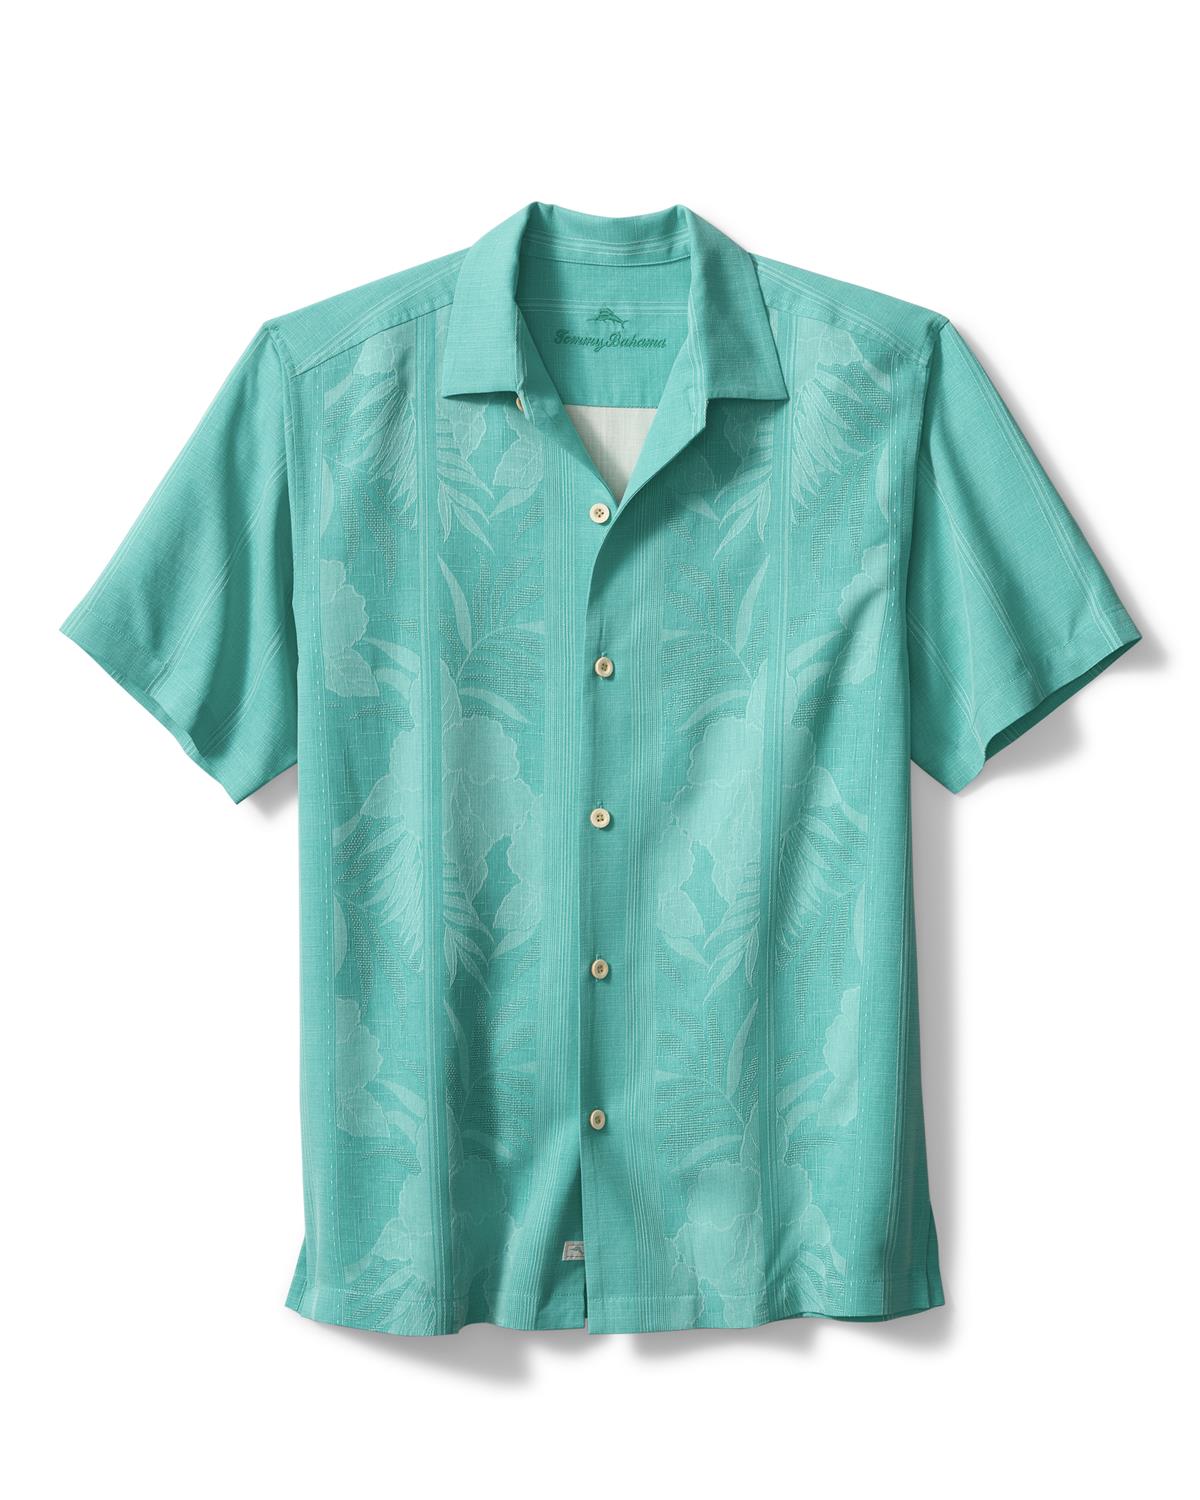 Tommy Bahama Men's Bali Border Silk Camp Shirt - River Blue - Size S